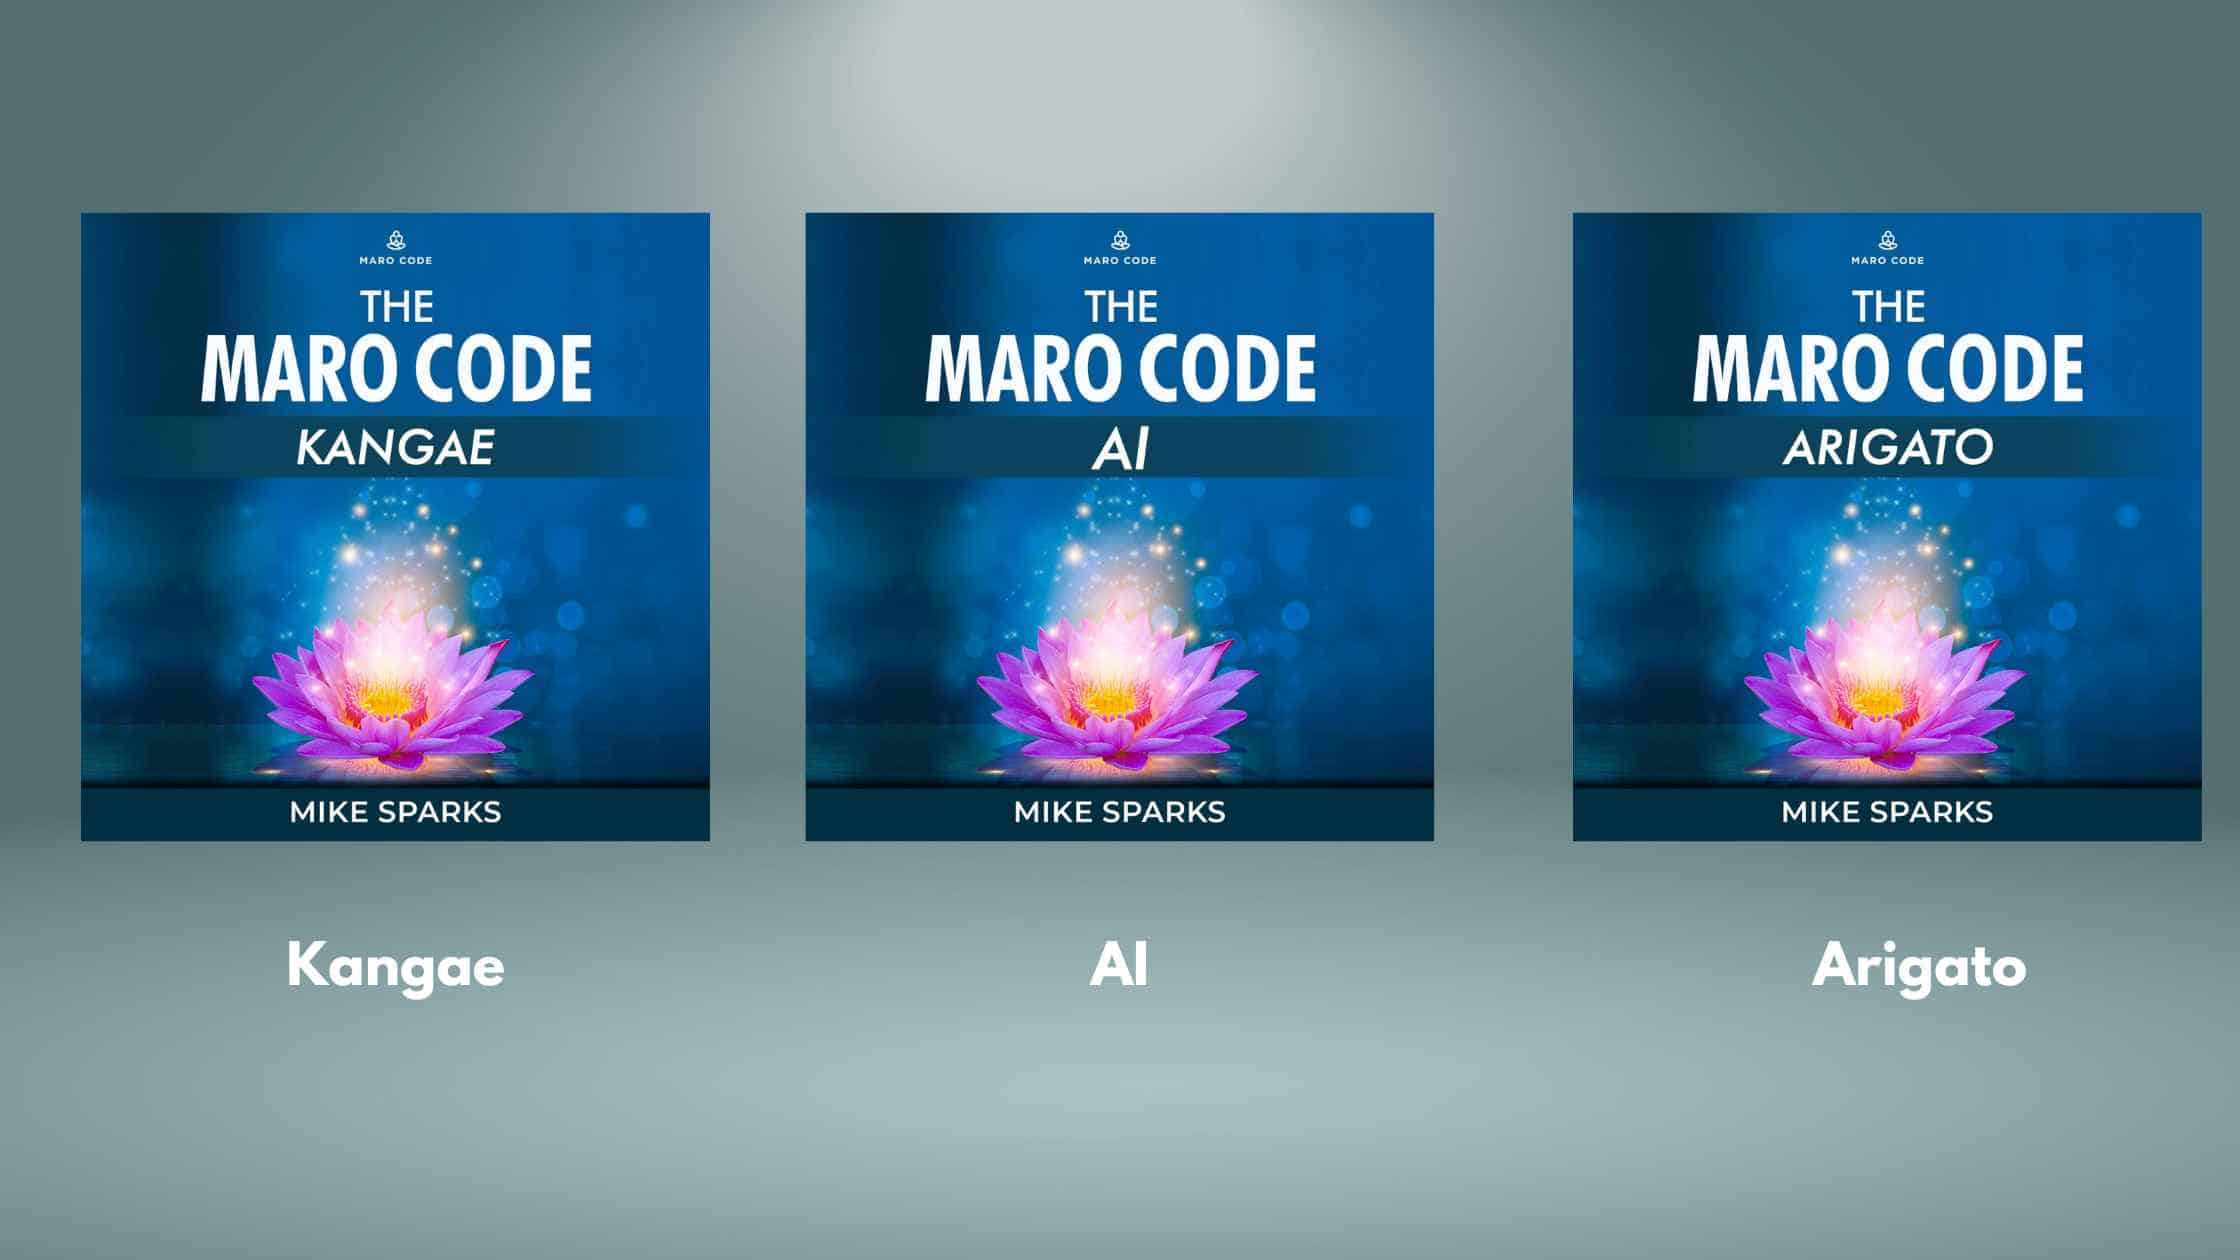 The Maro Code Audio Track Includes